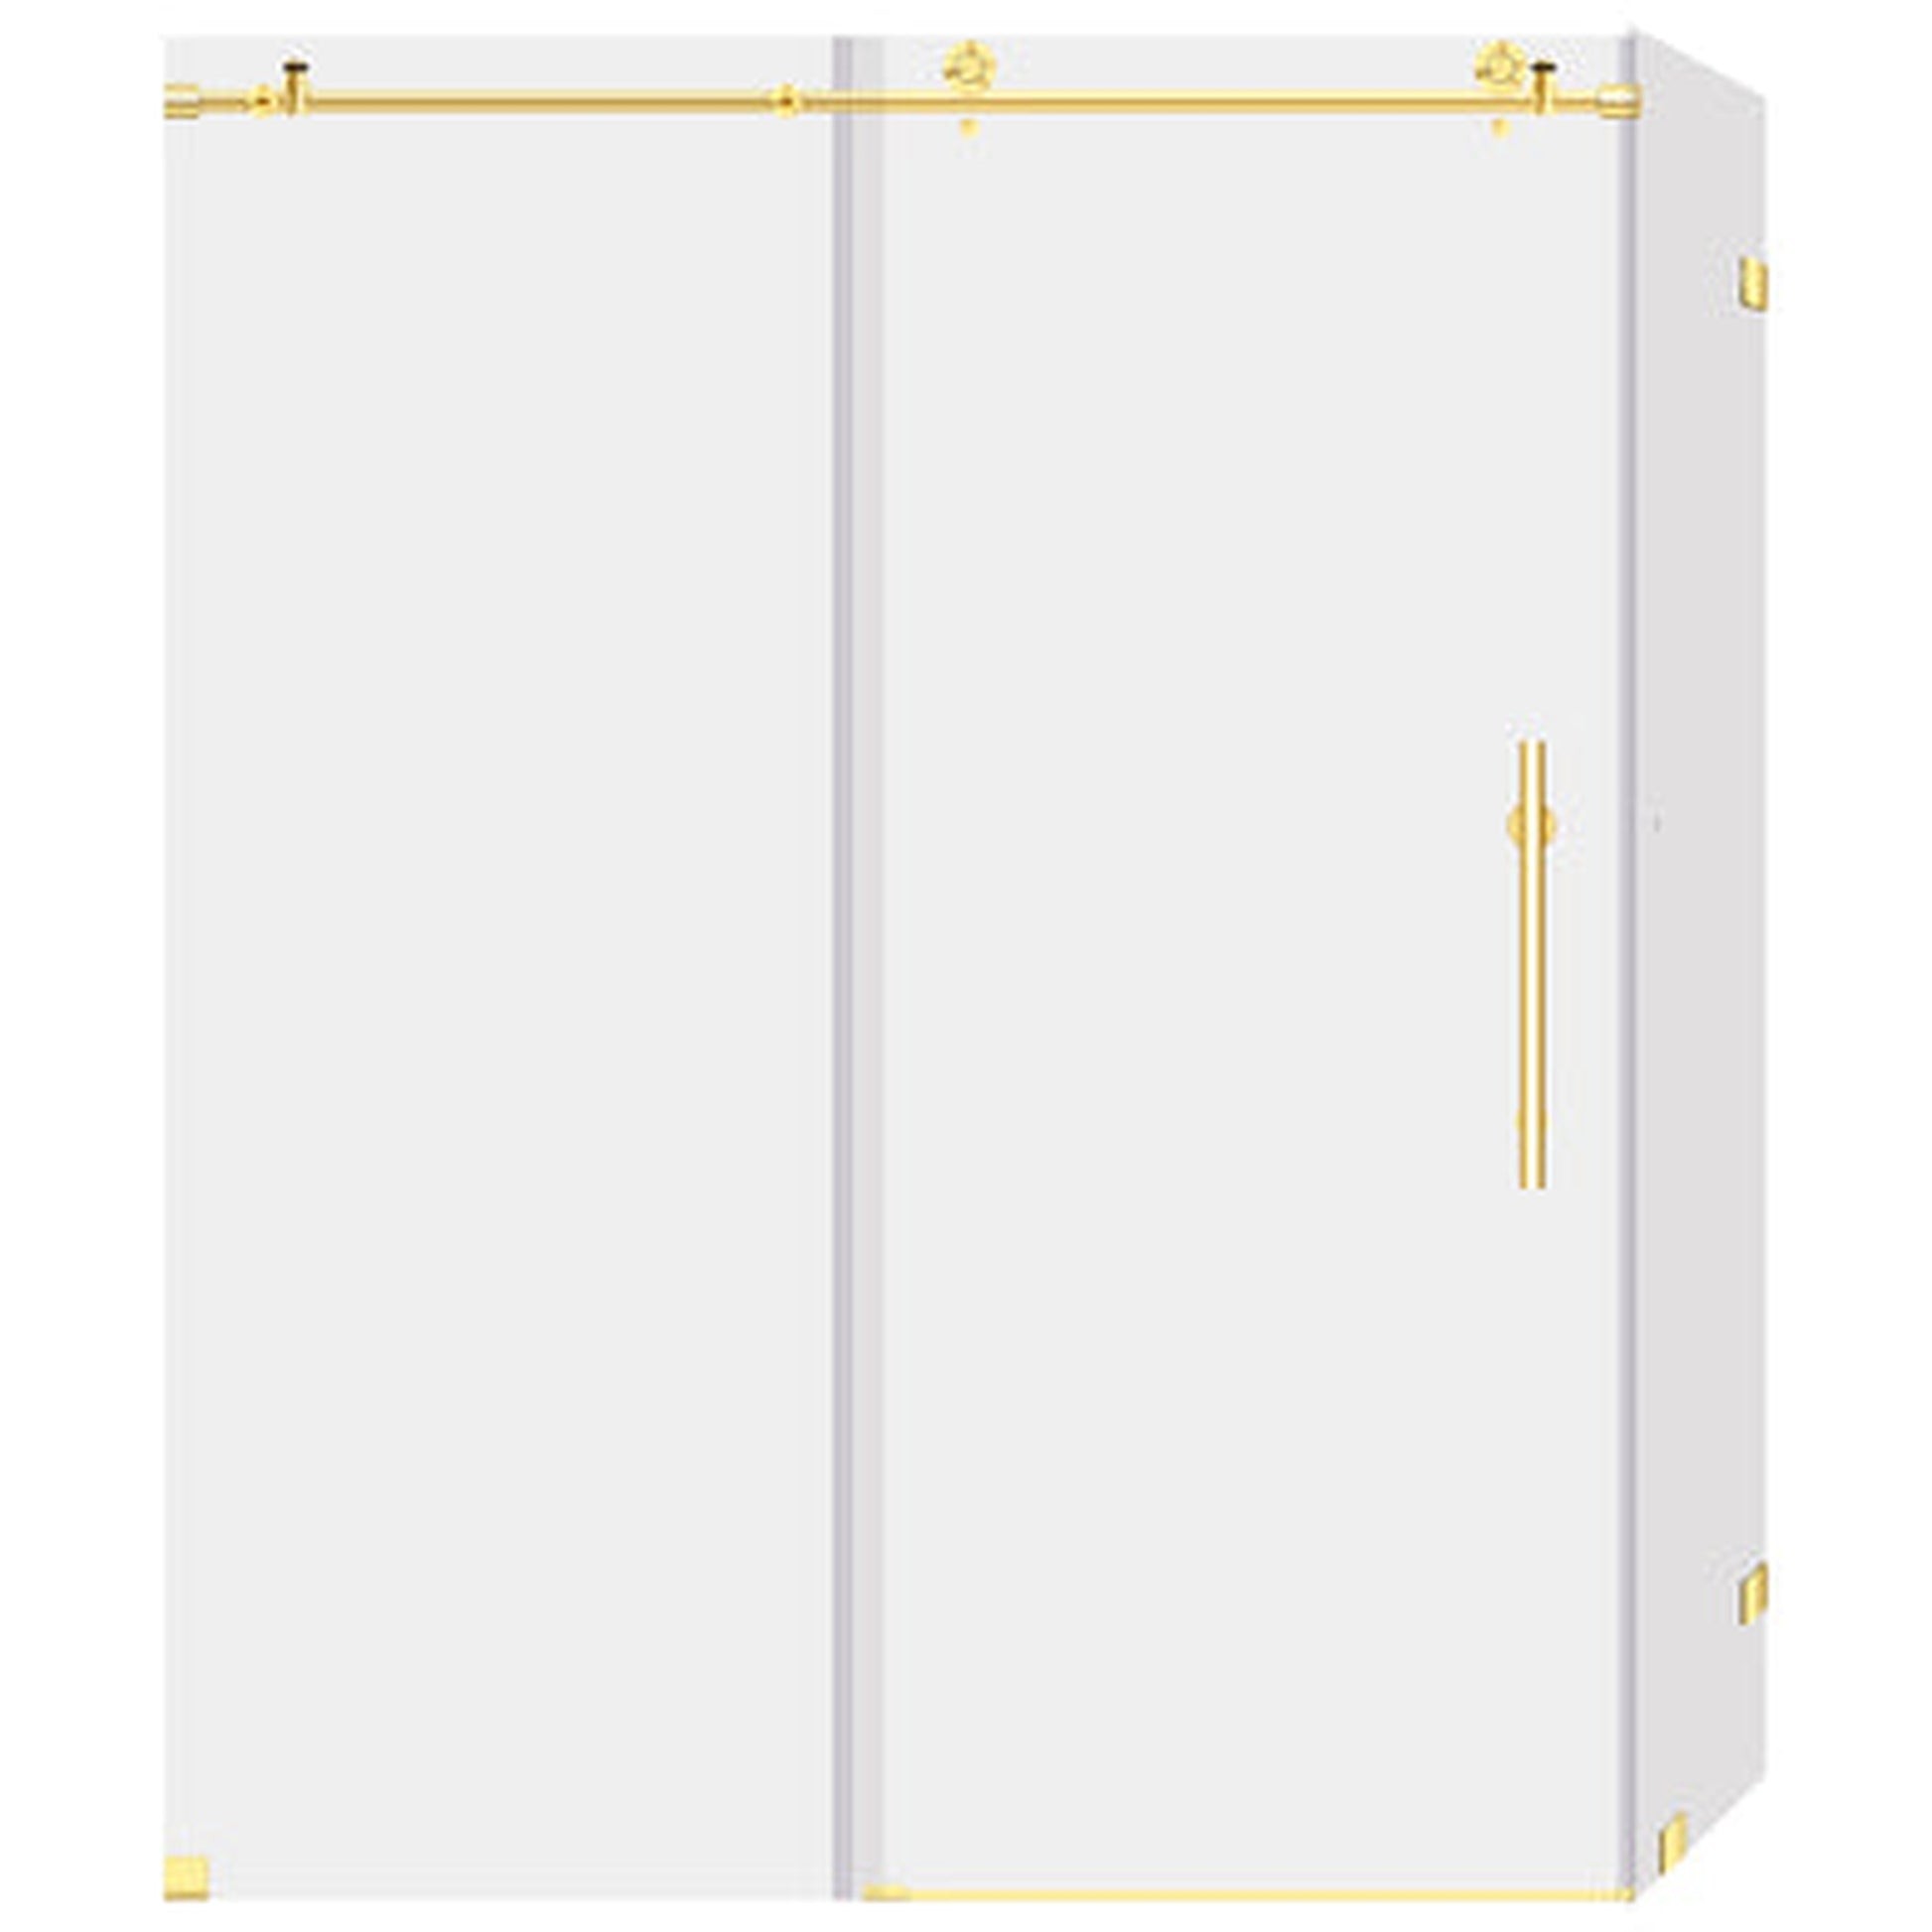 LessCare Ultra-C 44-48" x 76" x 34 1/2" Gold Sliding Shower Enclosure